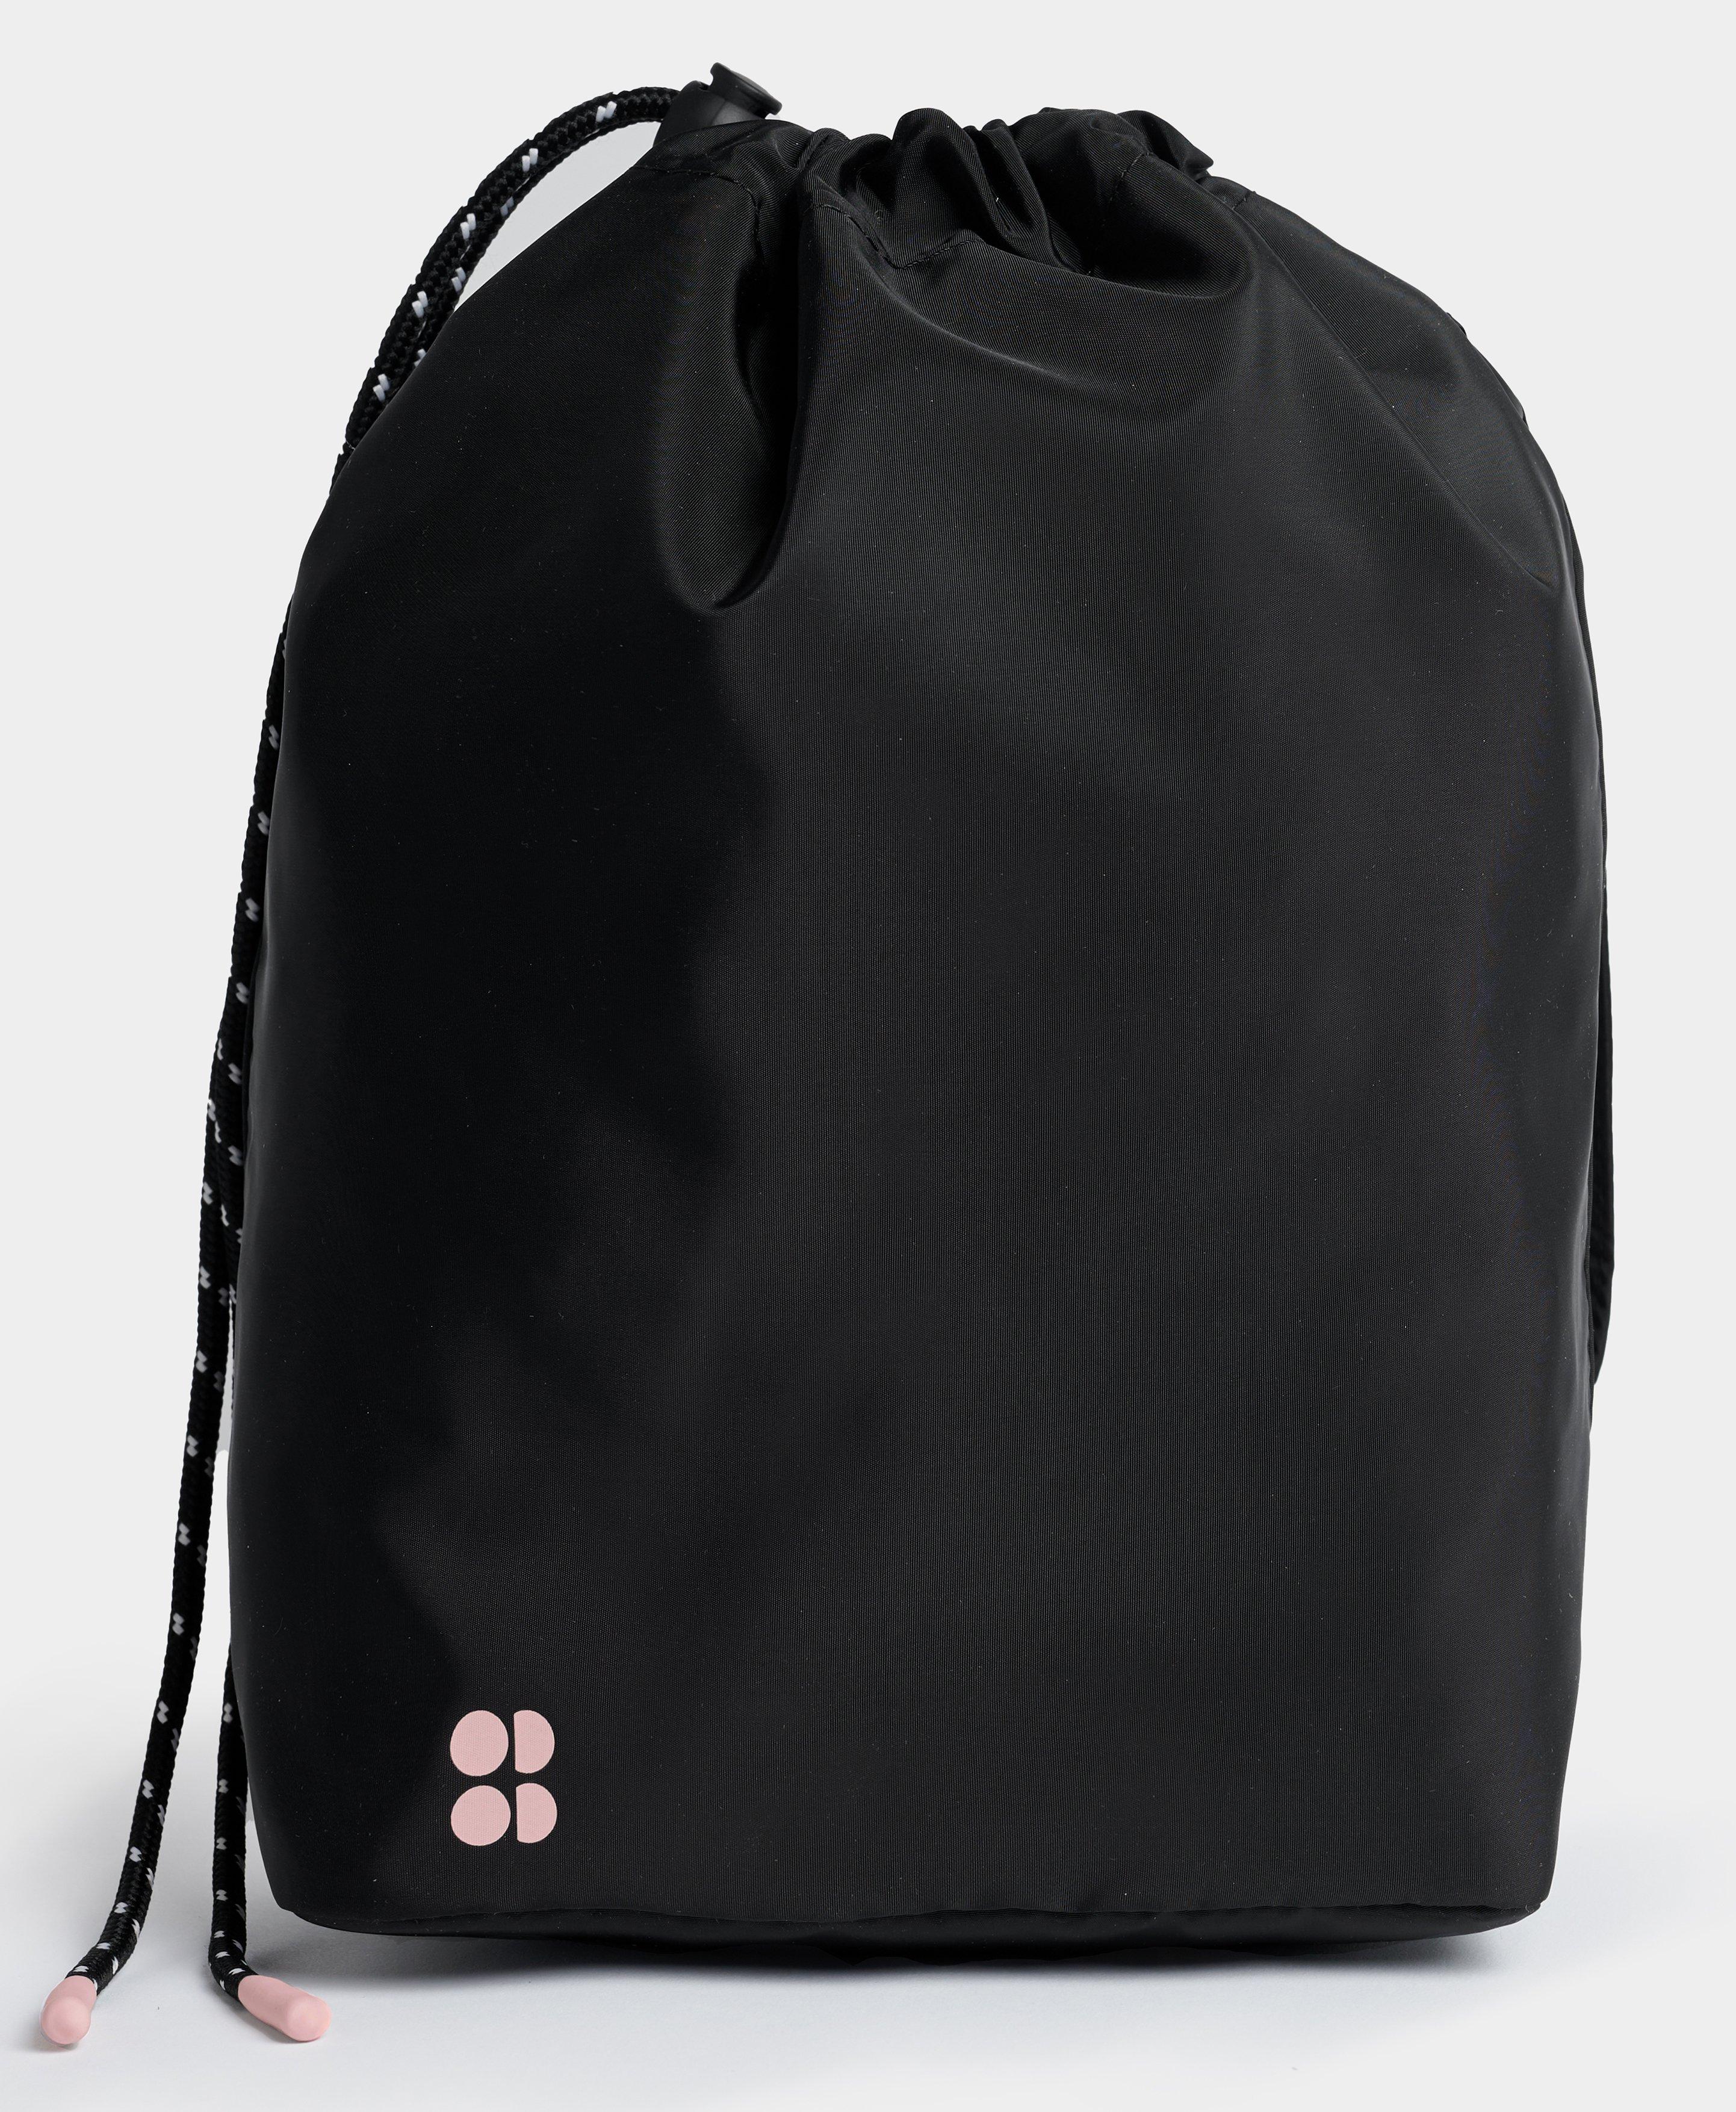 Travel bag Sweaty Betty Black in Polyester - 20591258